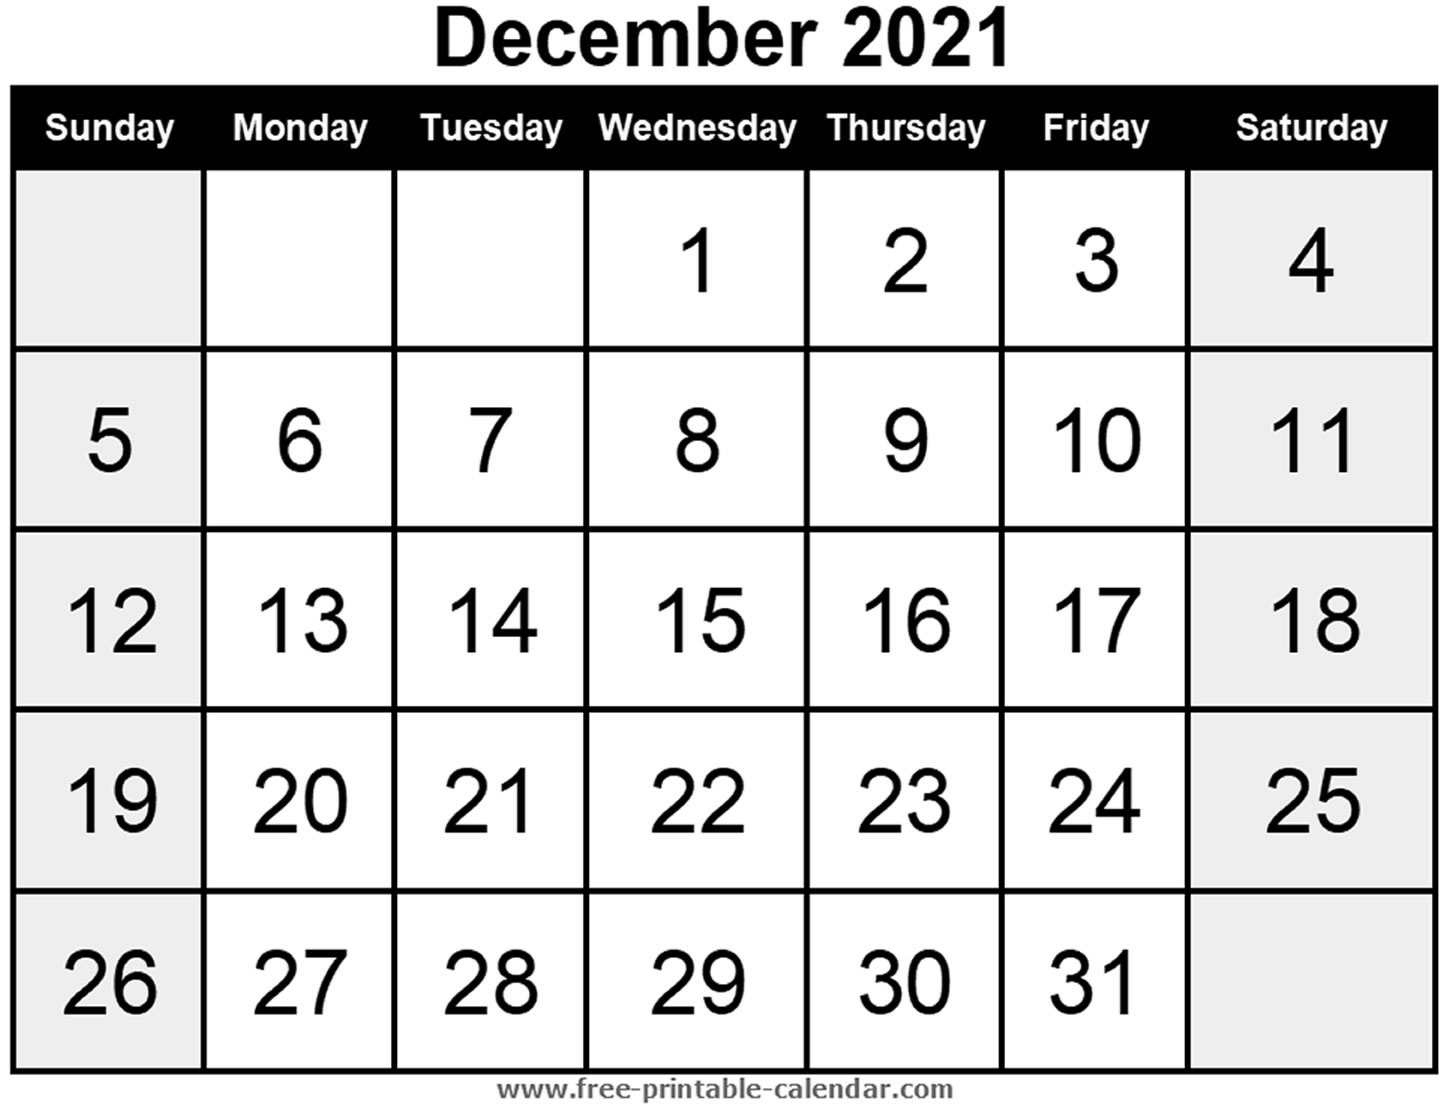 Blank Calendar December 2021 - Free-Printable-Calendar Printable December 2021 Calendar